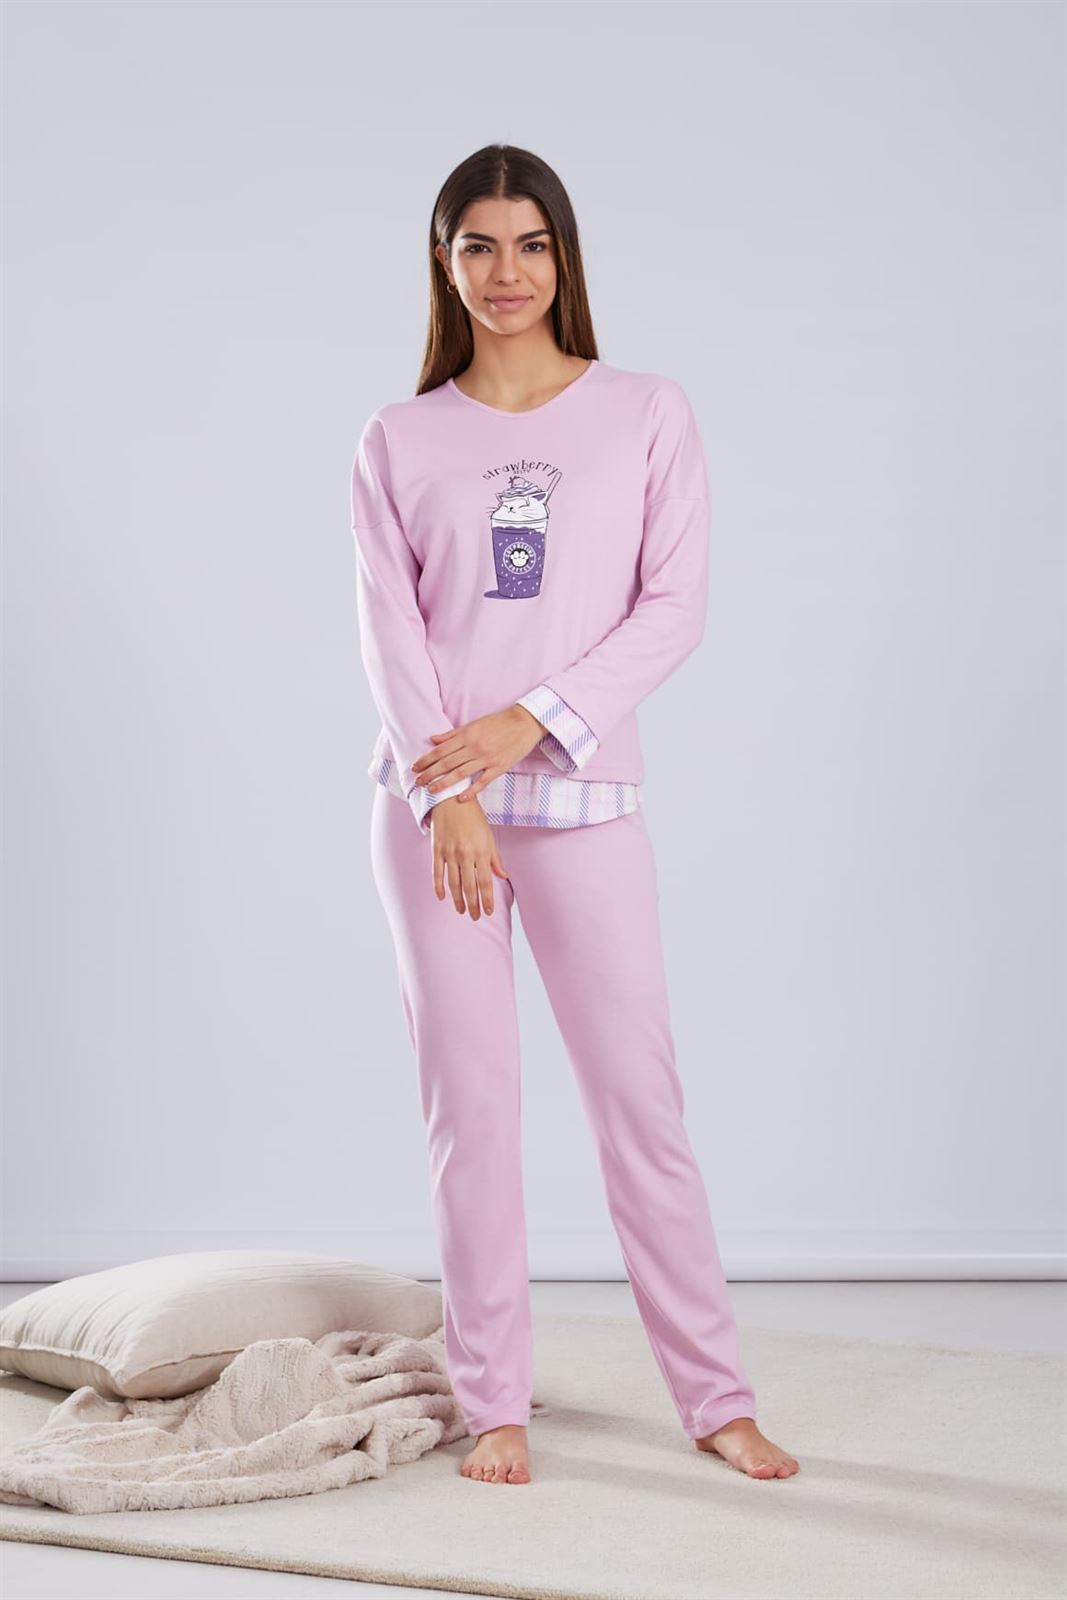 Pijama único - Imagen 1